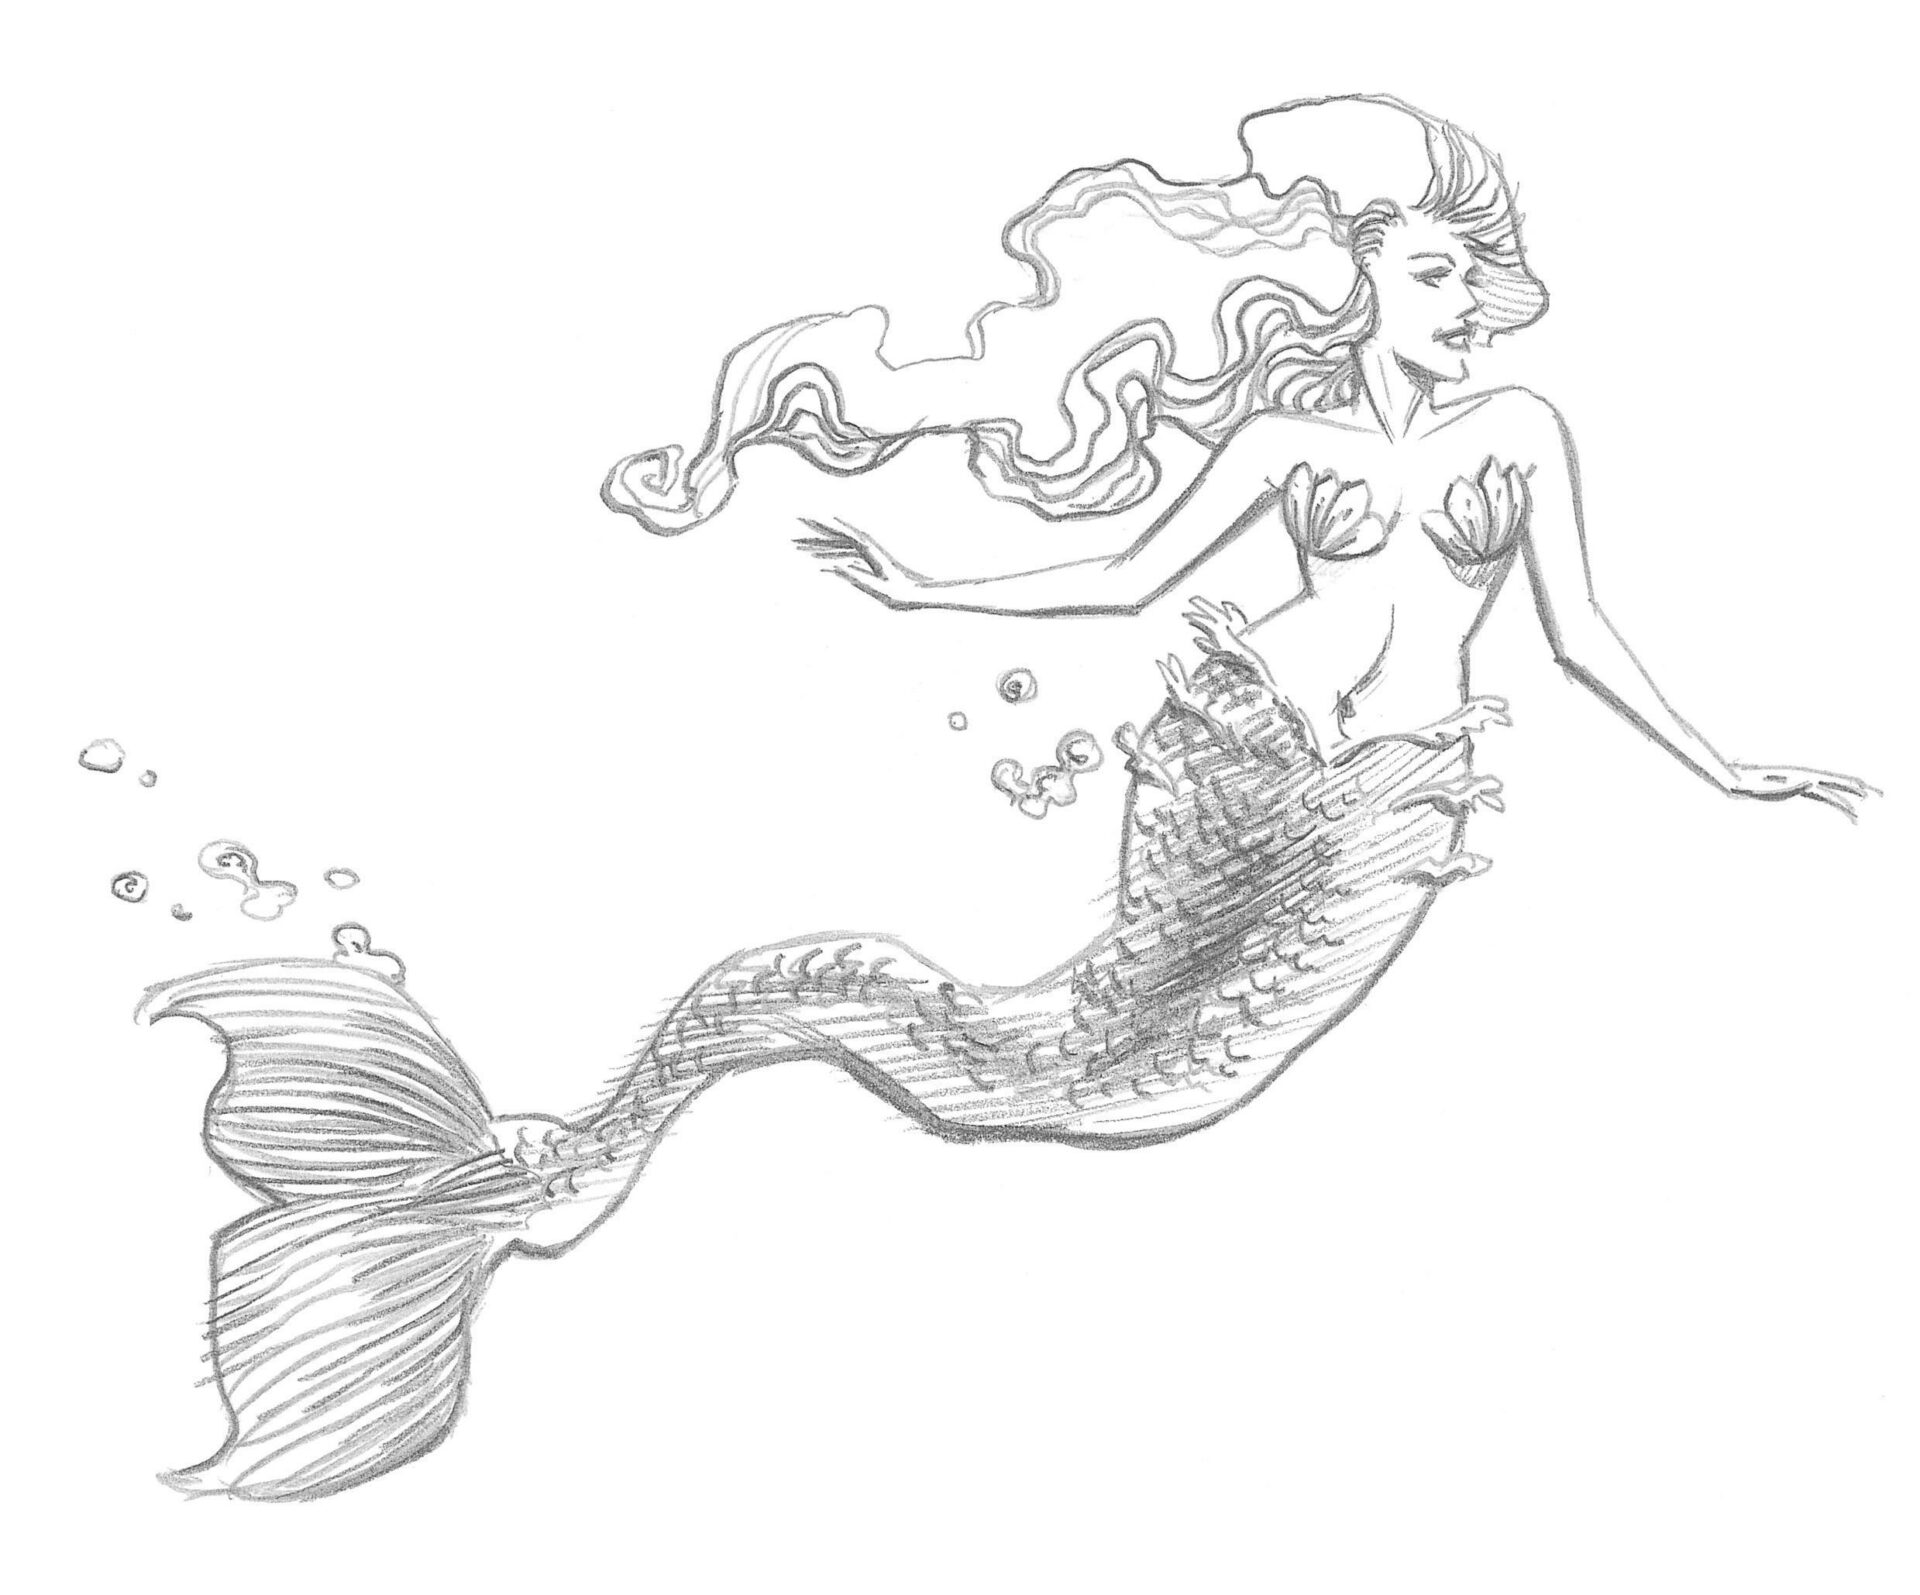 Anime Mermaid Drawings | Mermaid drawings, Drawings, Mermaid art